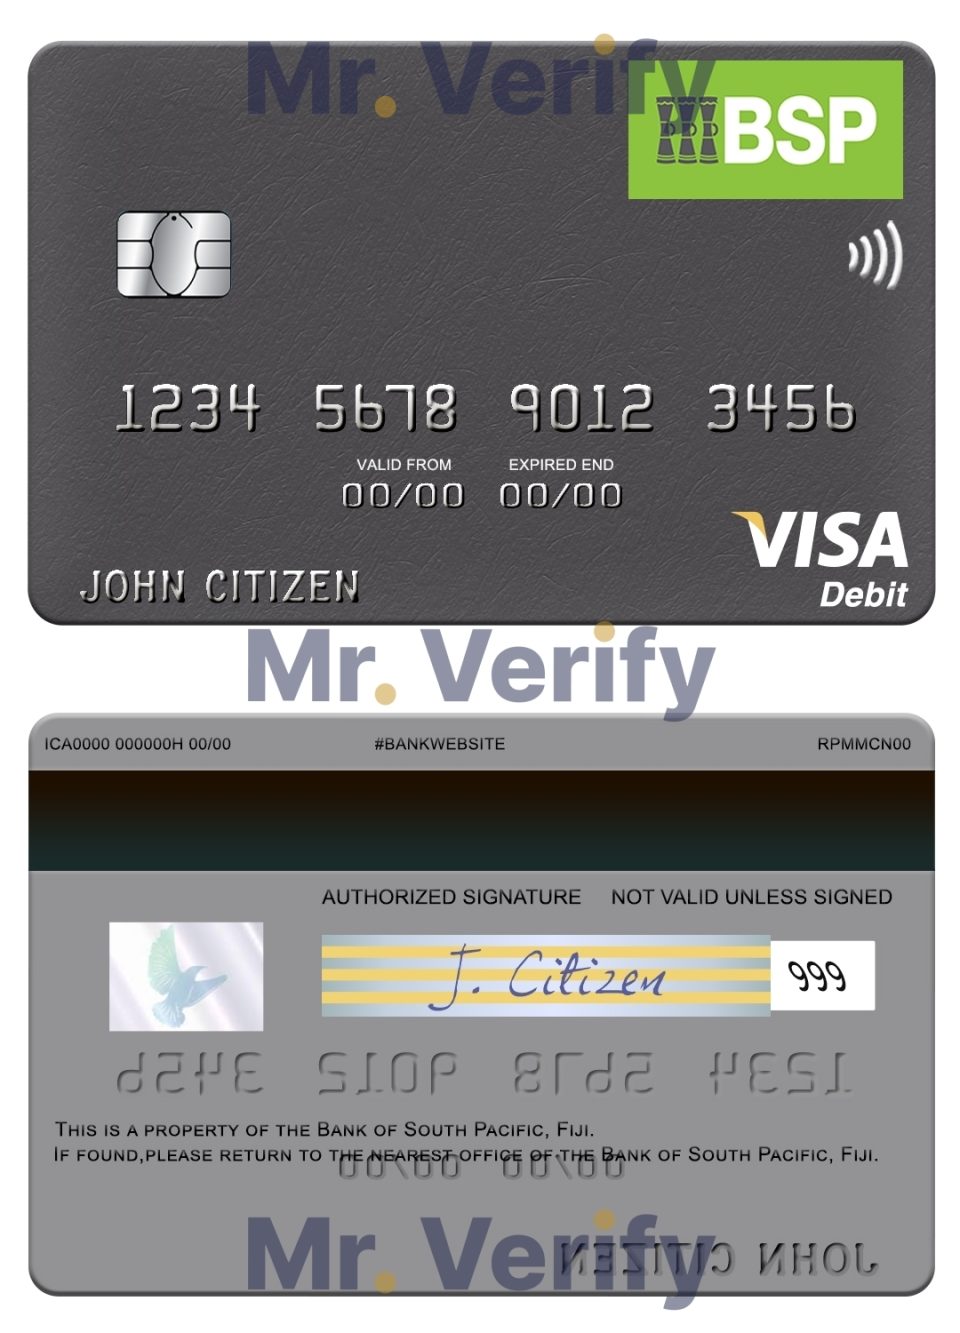 Fillable Fiji Bank of South Pacific visa debit card Templates | Layer-Based PSD